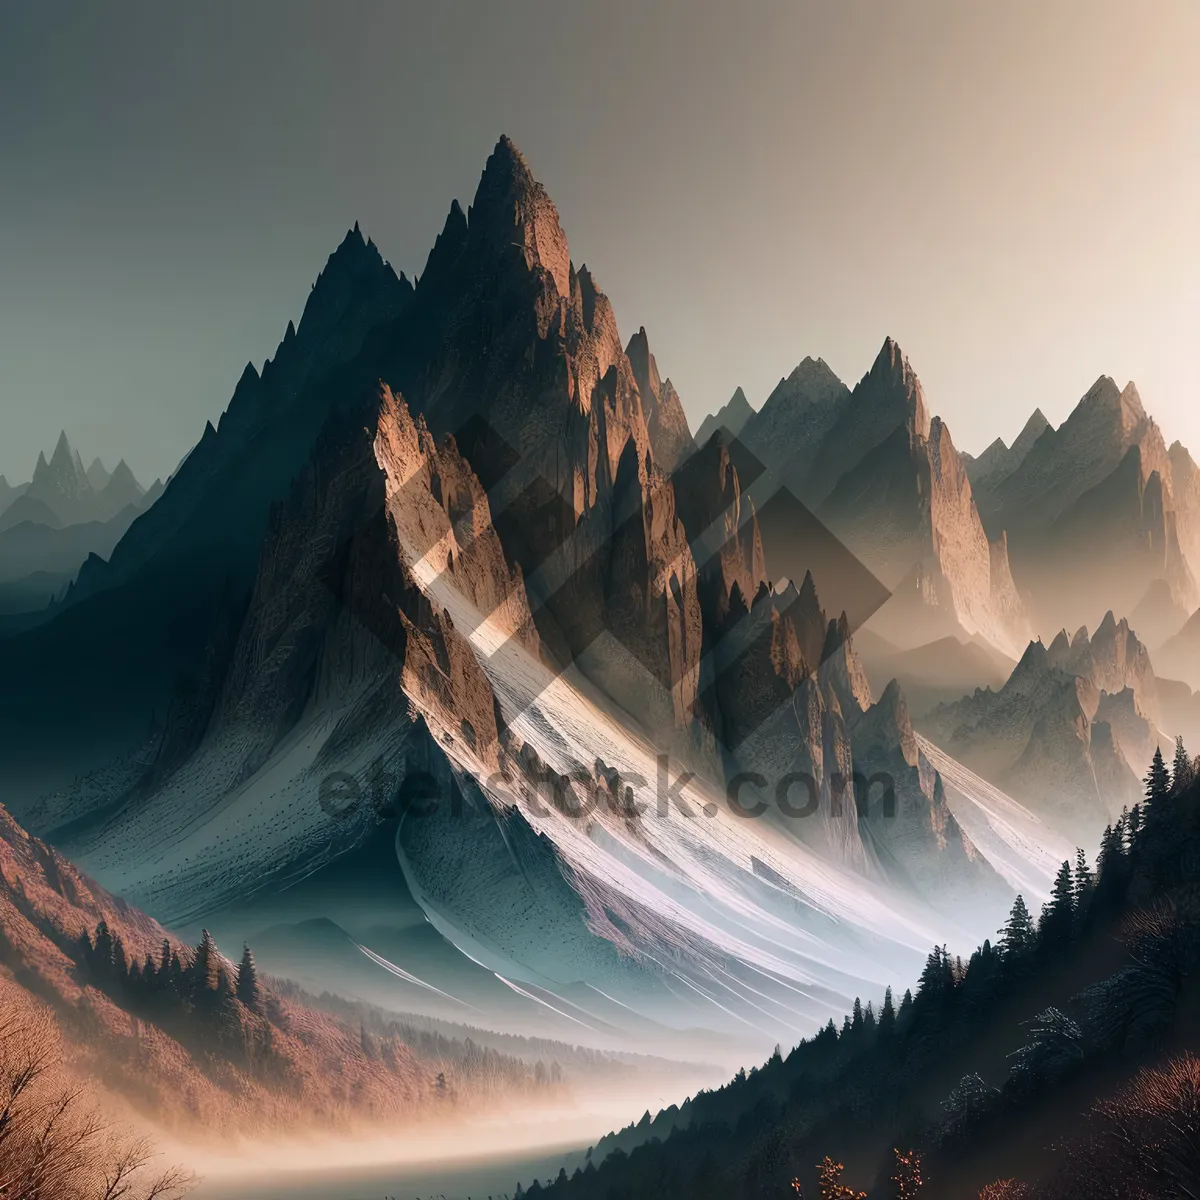 Picture of Majestic alpine landscape showcasing glacier and snowy peaks.